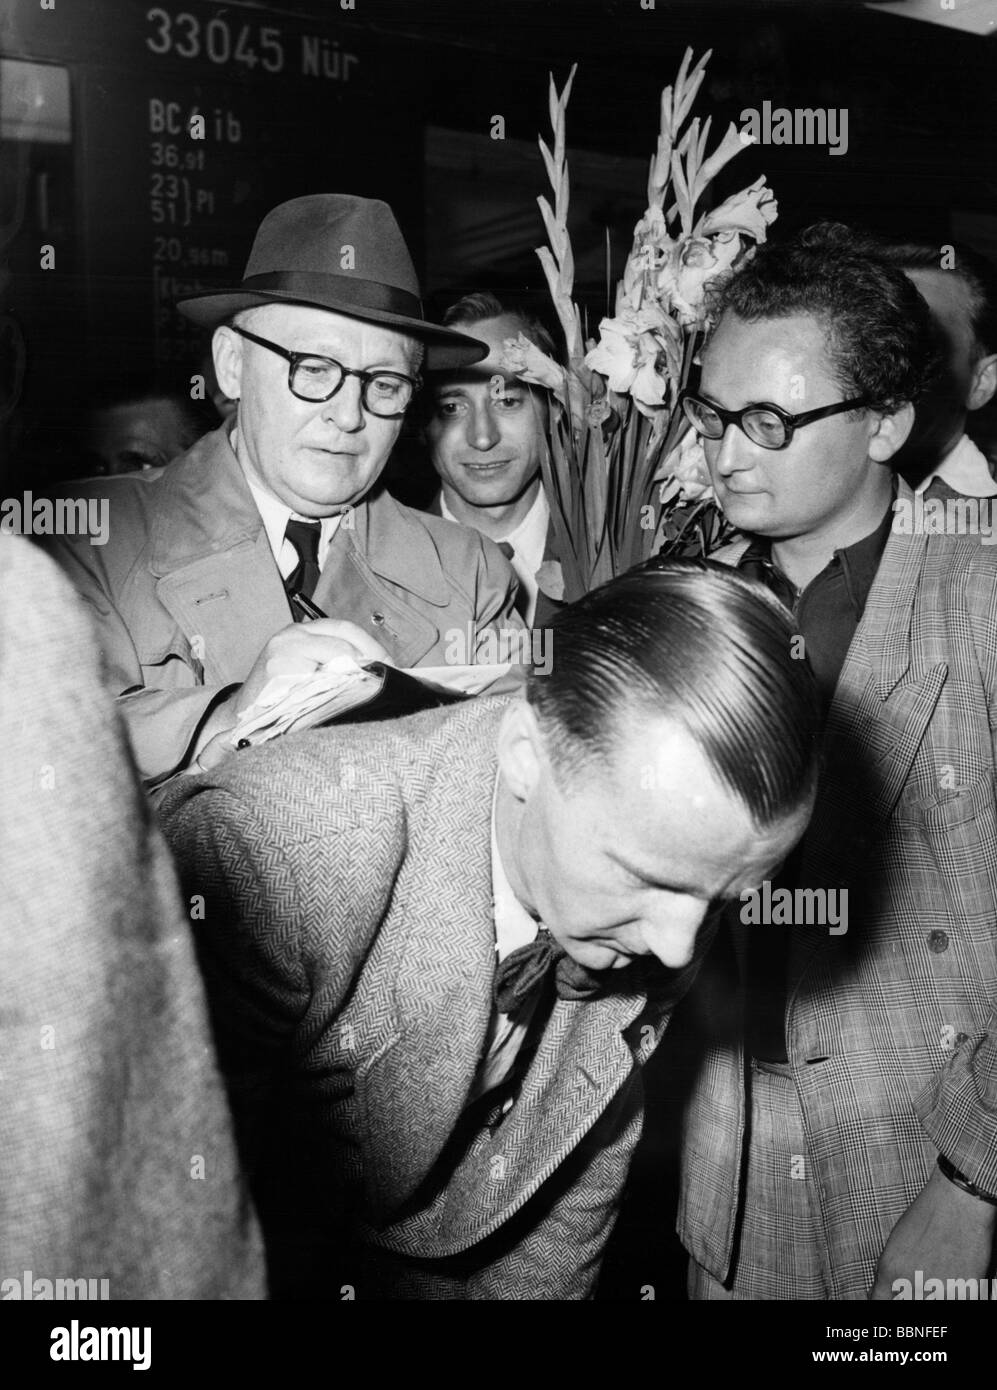 Student, Kurt, 12.5.1890 - 1.7.1978, deut. General, gining an autograph, Nuremberg Railway Station, 31.8.1952, , Stock Photo